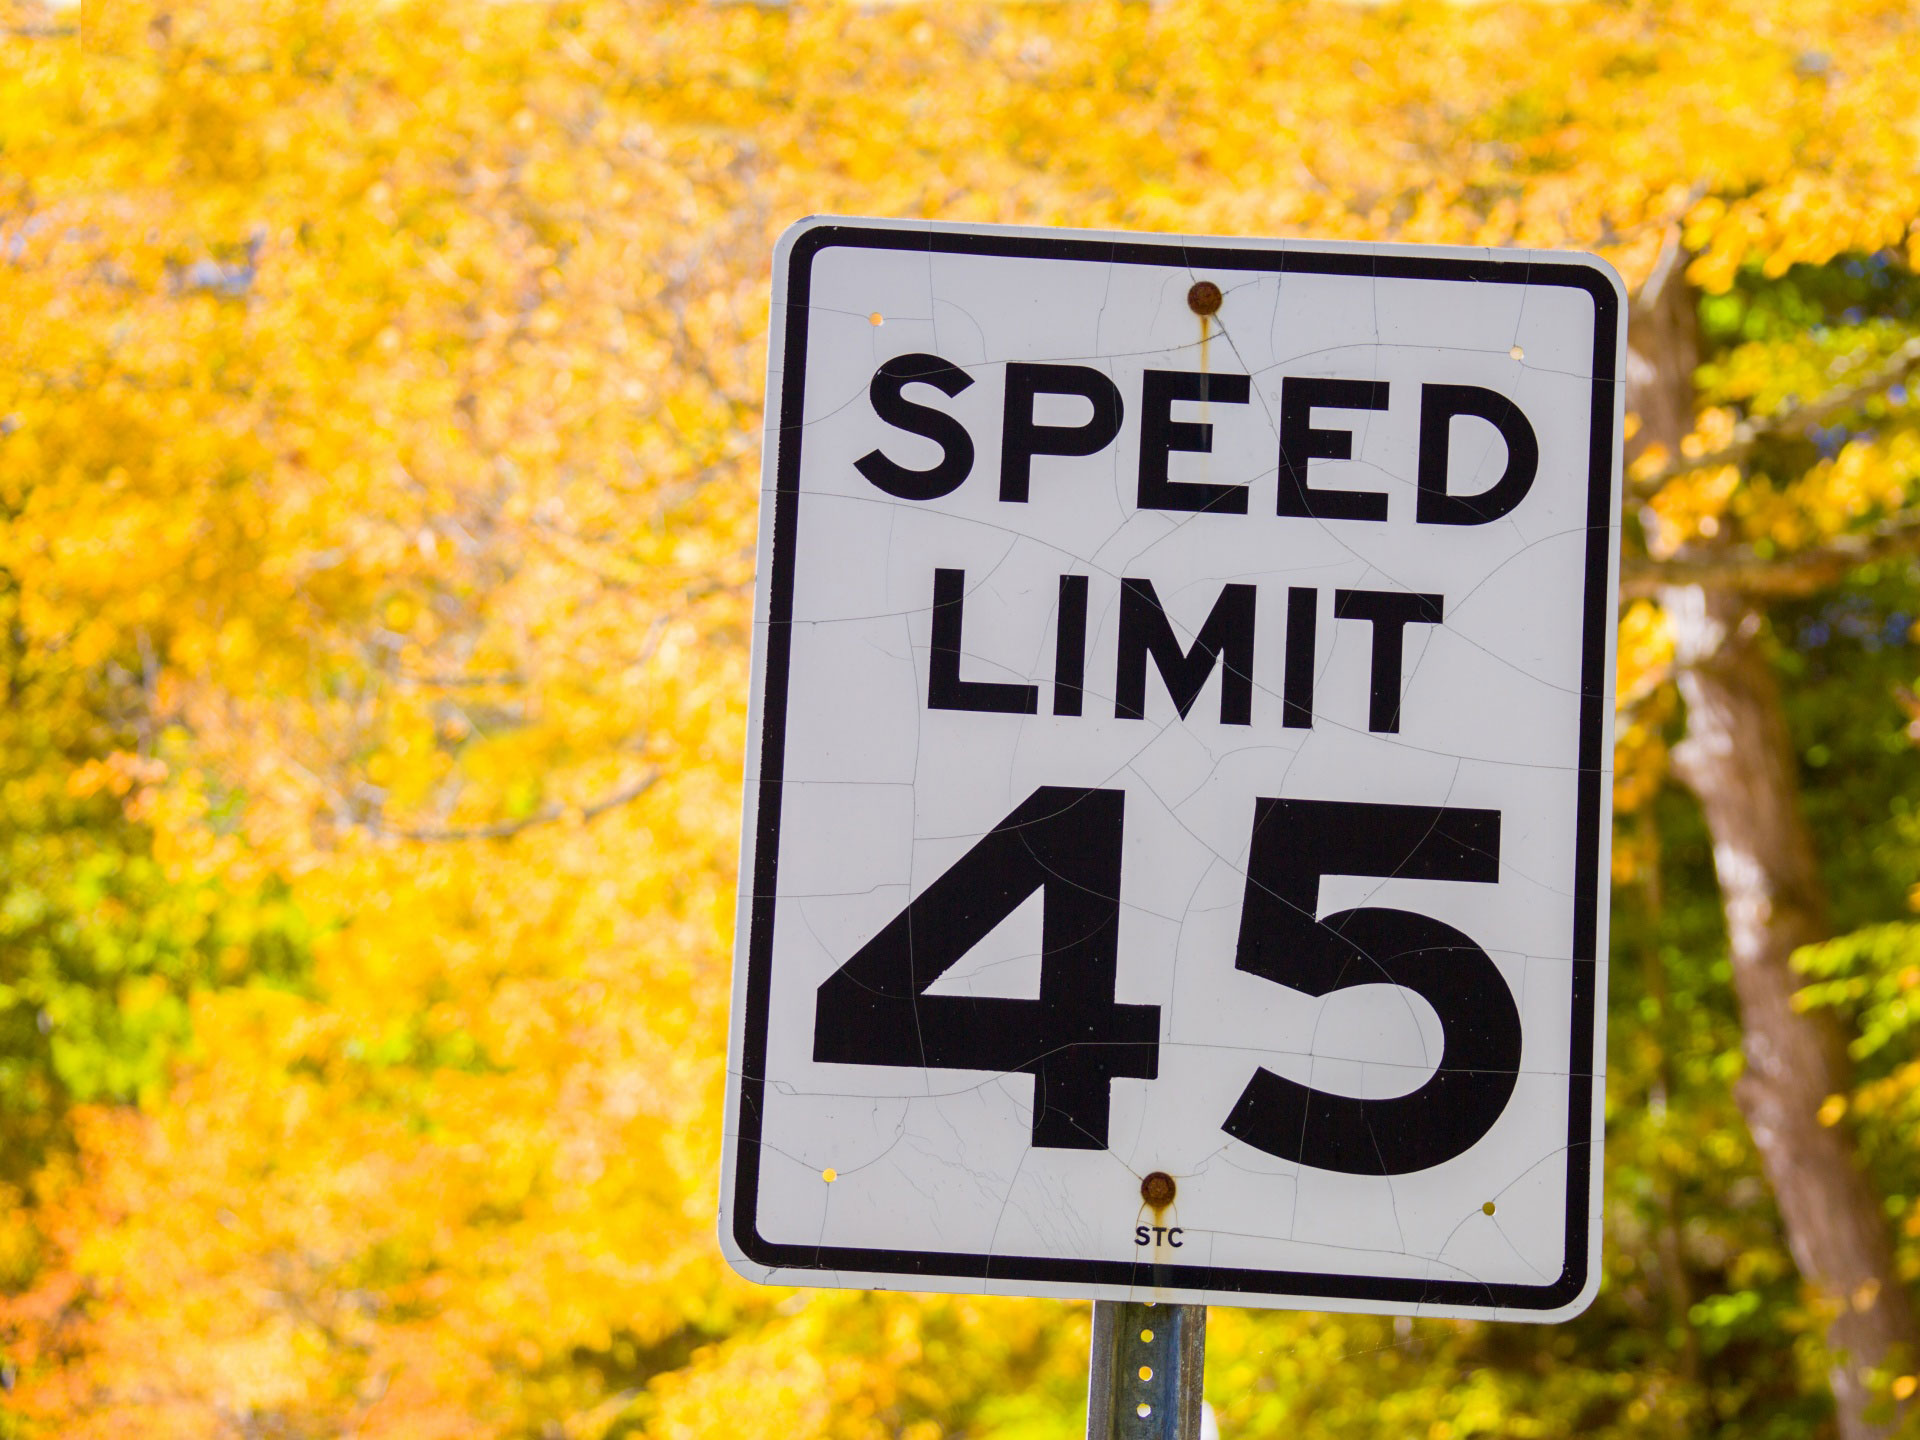 Спид лимитс. Speed limits. Speed limit картинка. Знак 45 км. Speed limit 45 sign.